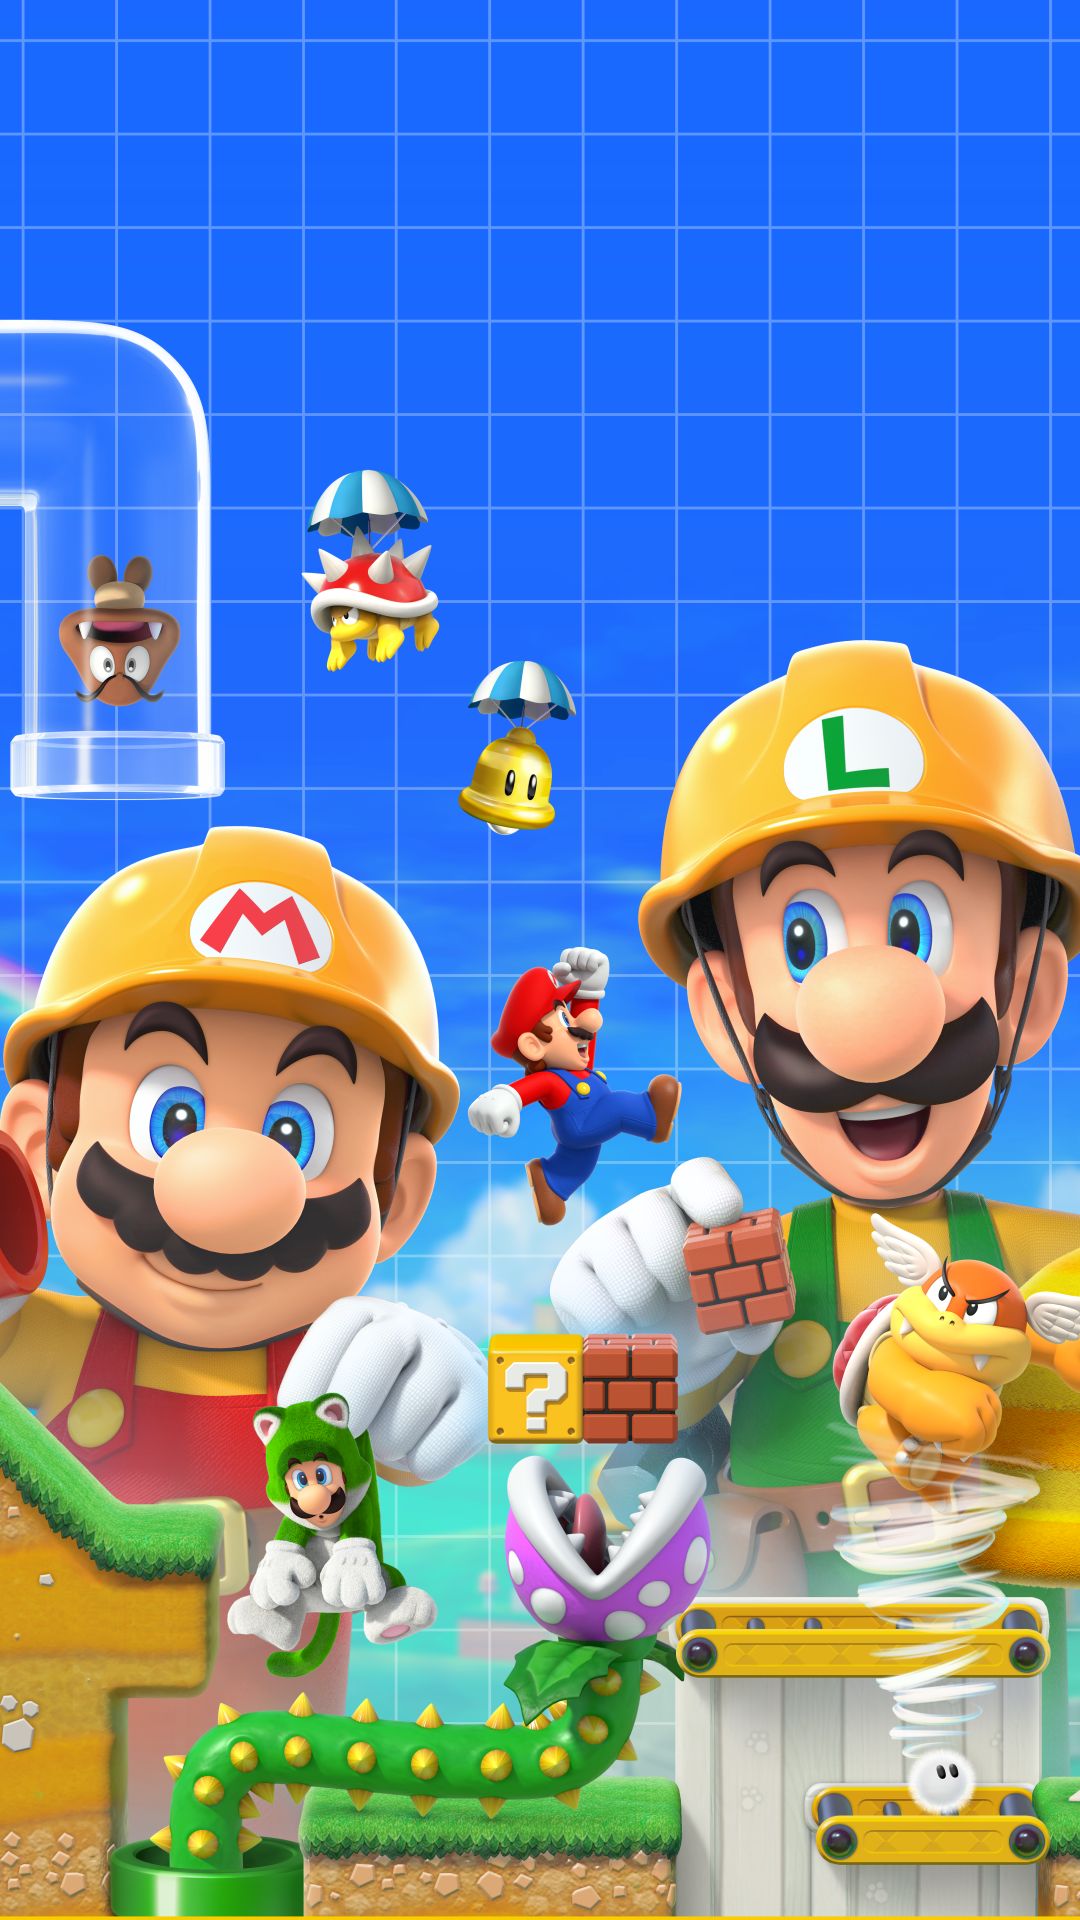 Завантажити шпалери Super Mario Maker 2 на телефон безкоштовно